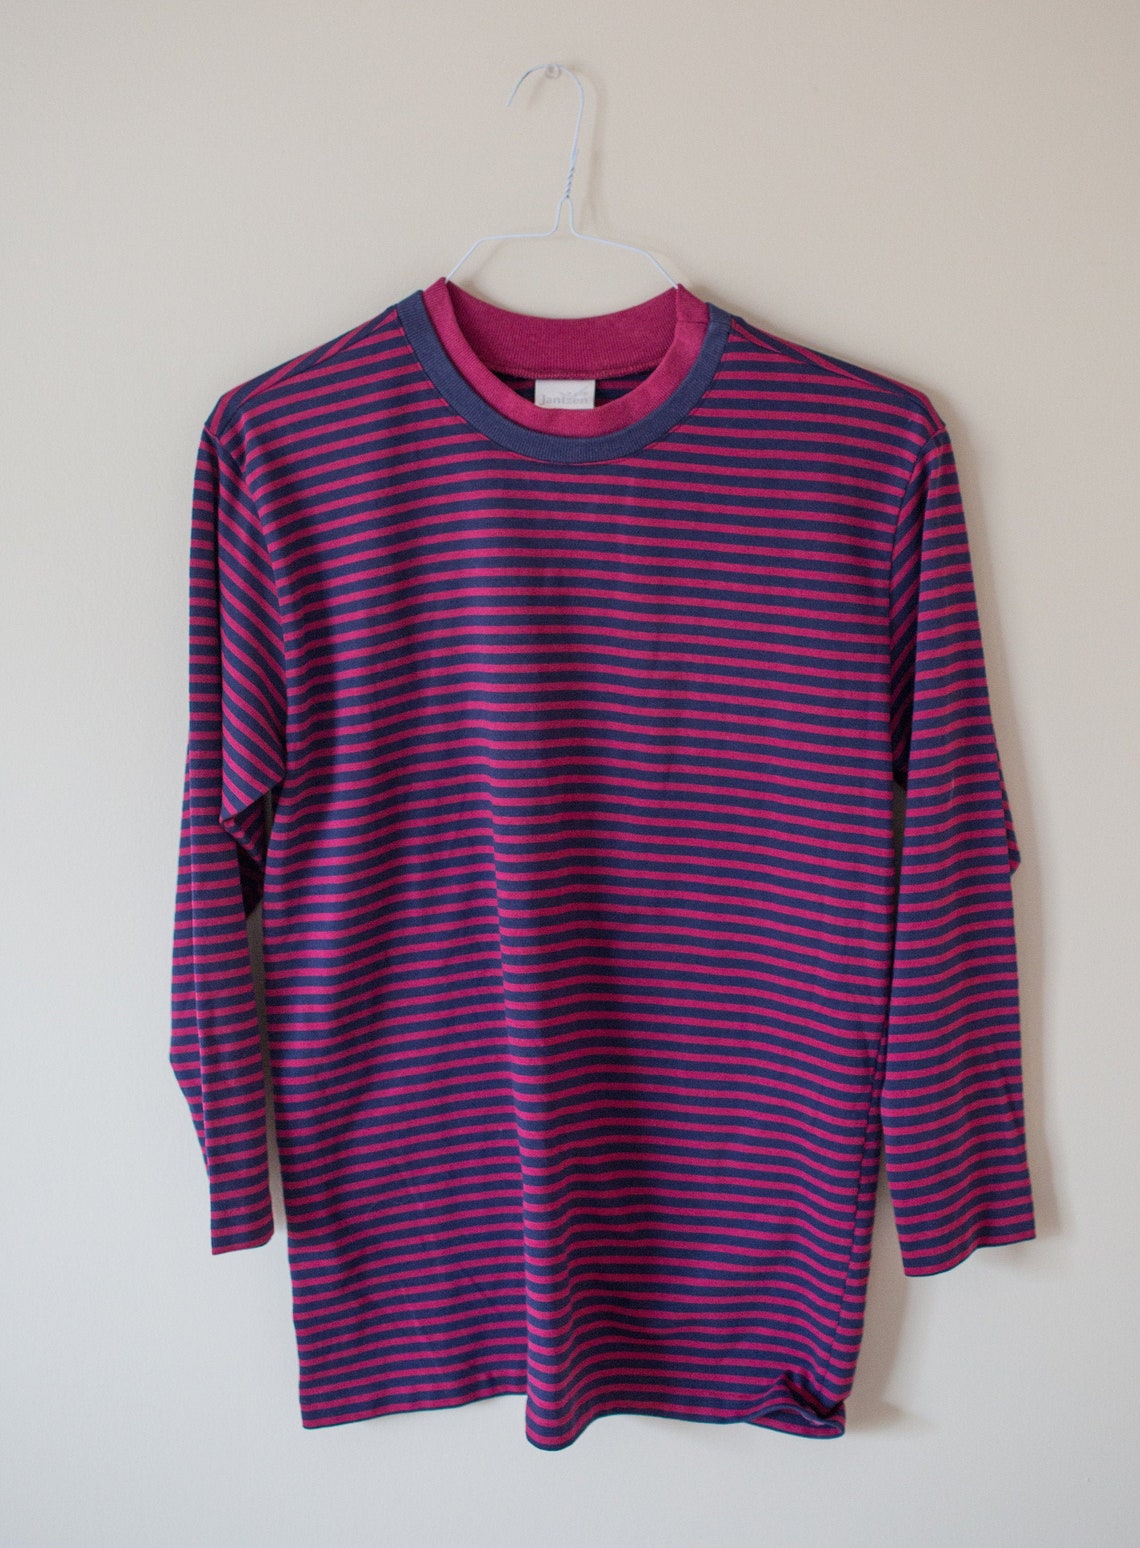 Vintage Jantzen Striped Shirt | Etsy